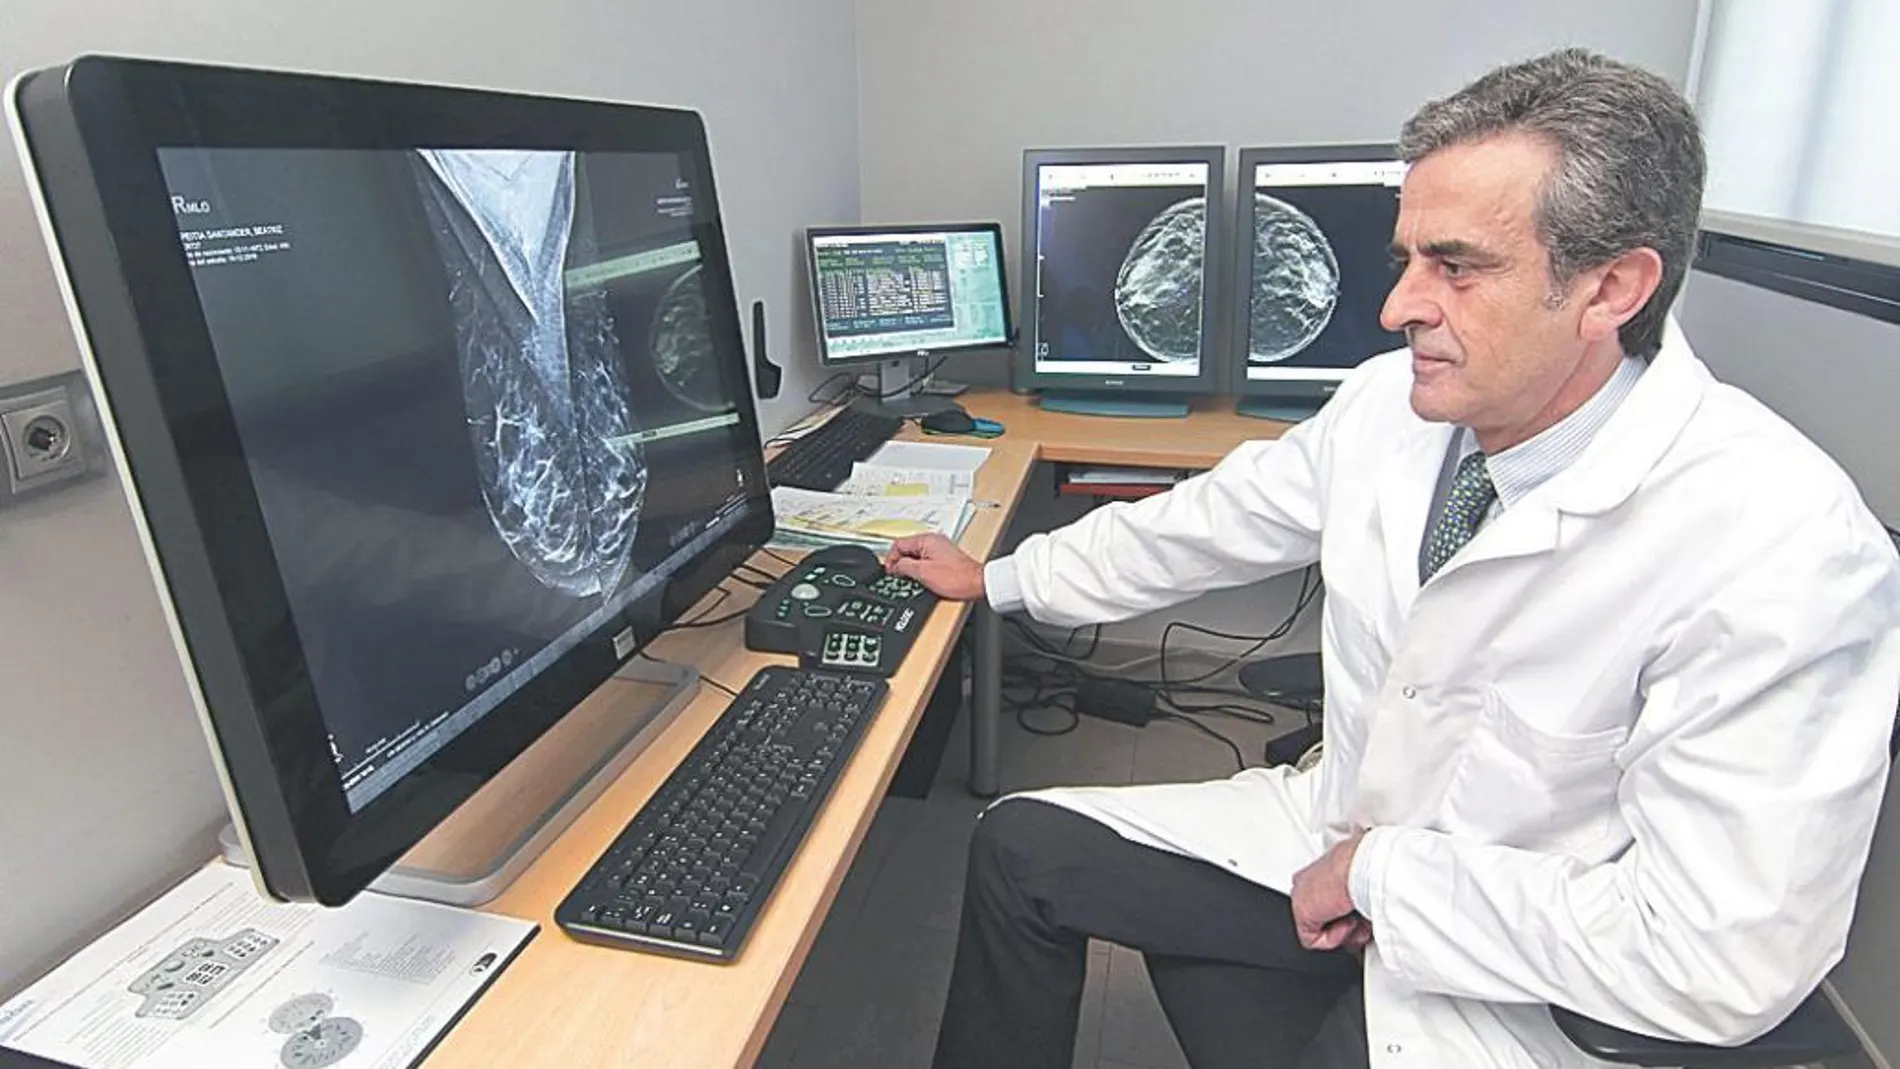 Un mamógrafo que permite detectar un 40% más de tumores